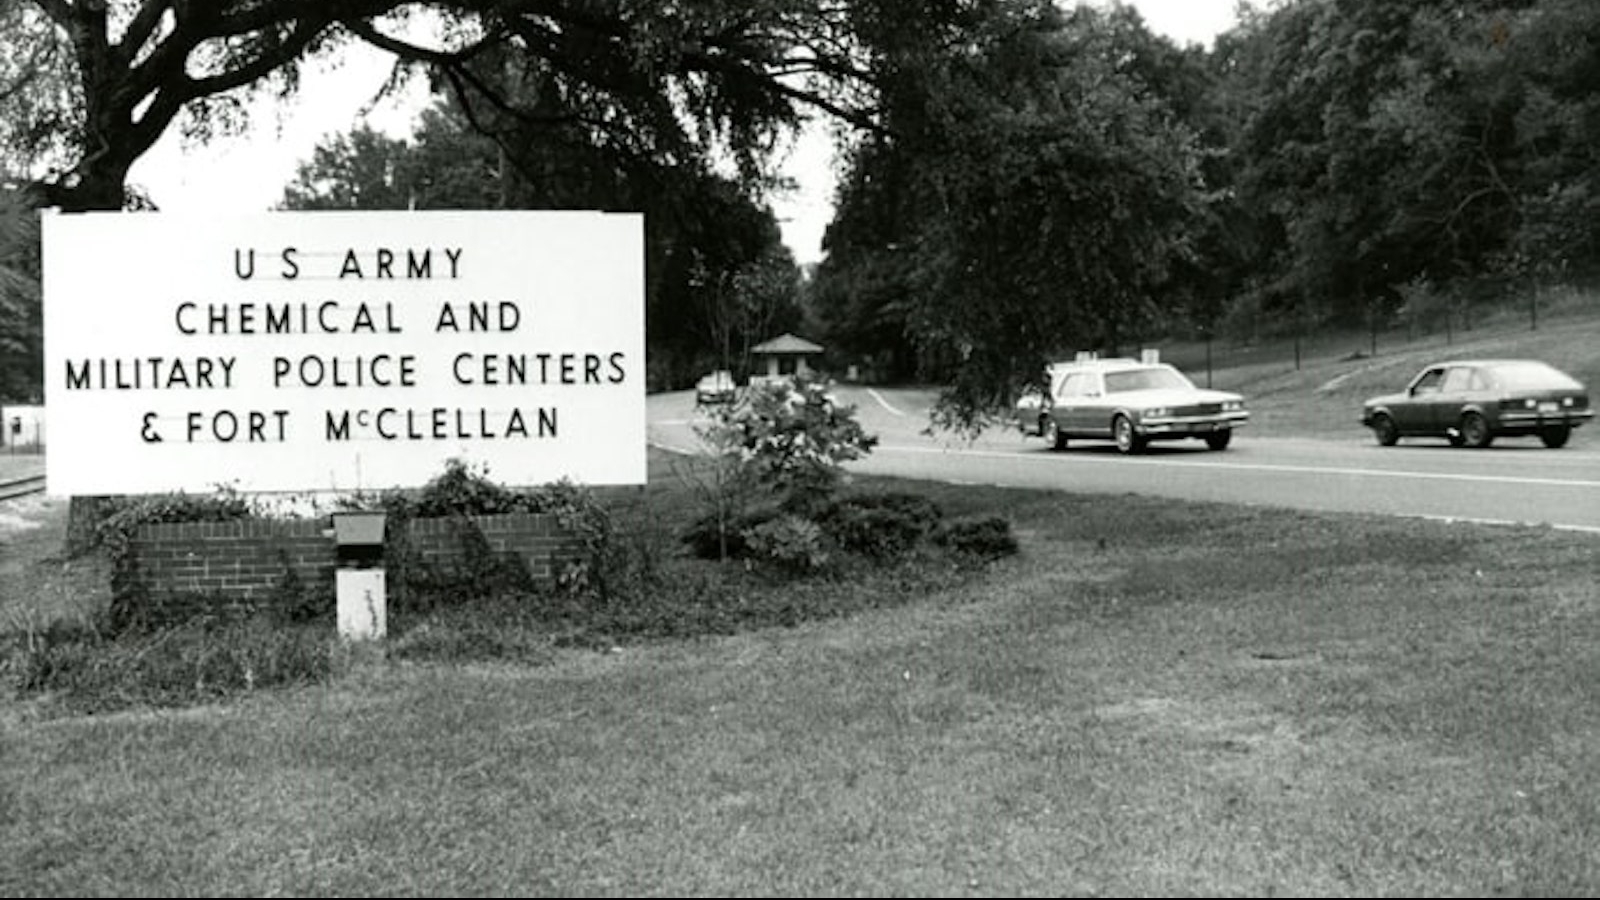 Fort McClellan: A Nightmare of Toxic Exposures in the U.S Military